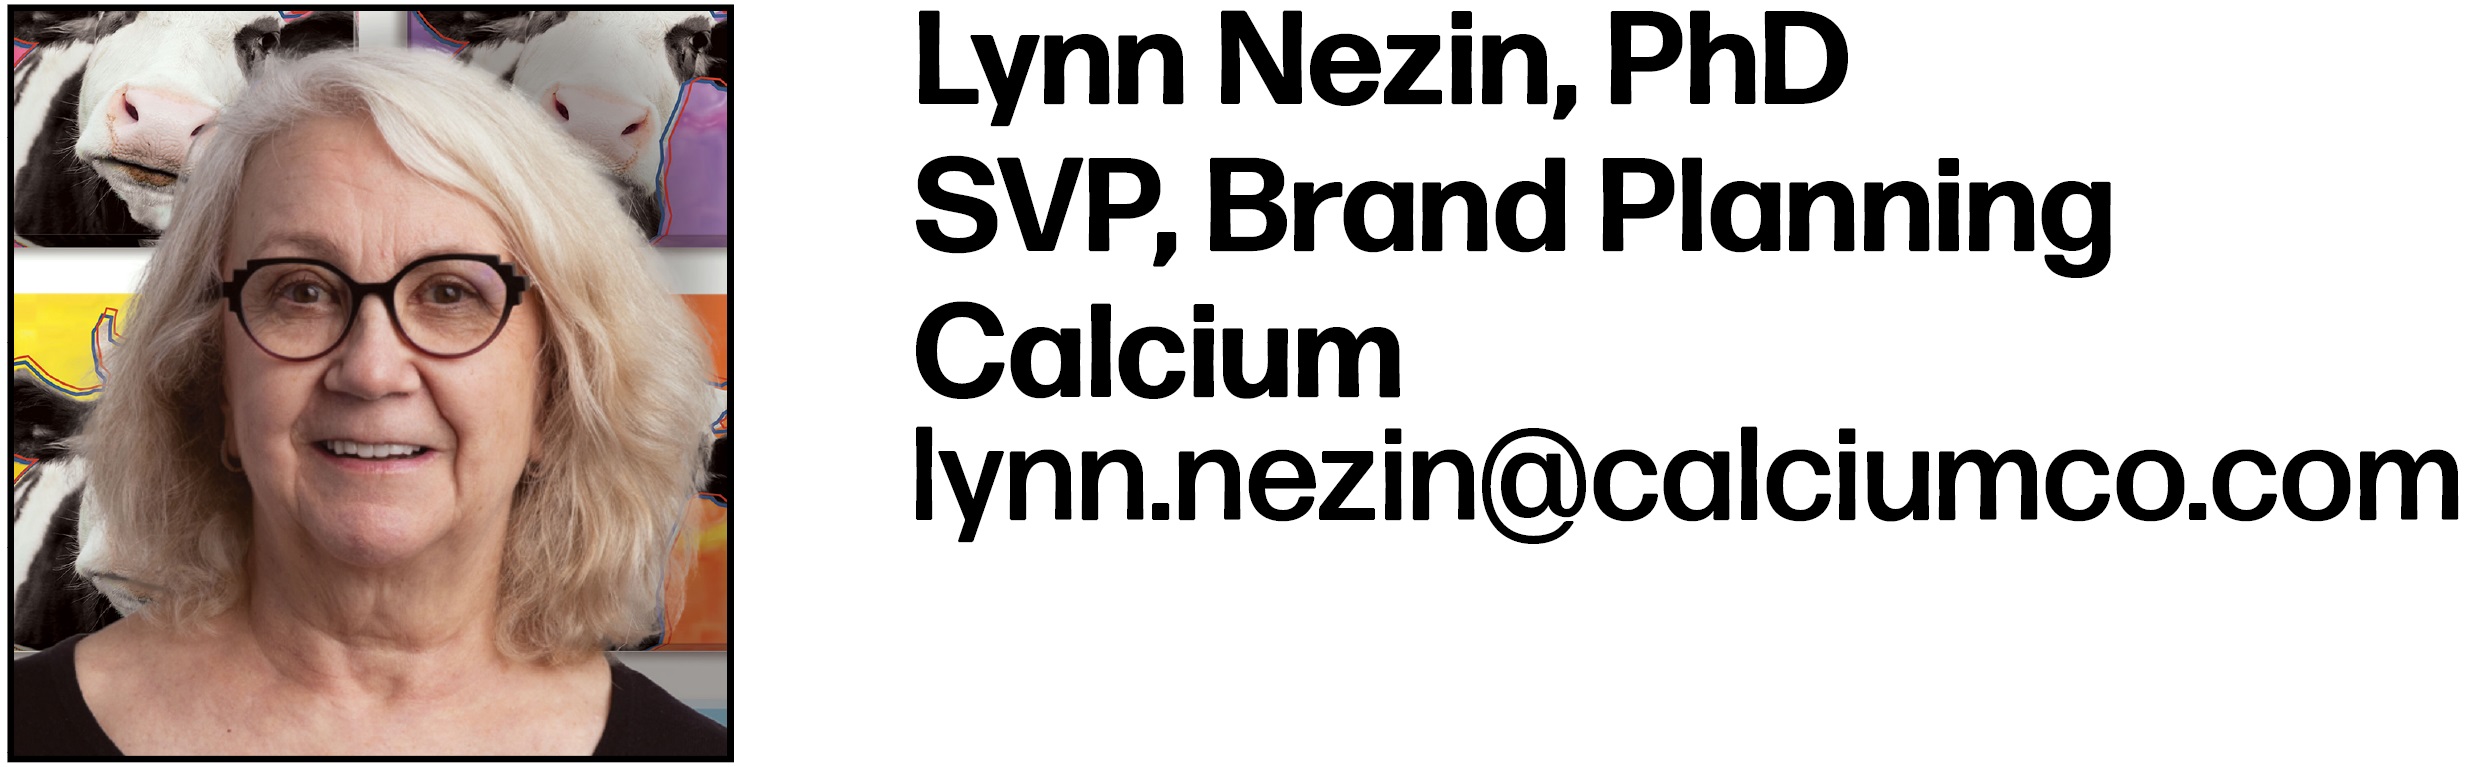 Lynn Nezin, PhD
SVP, Brand Planning
Calcium
lynn.nezin@calciumco.com